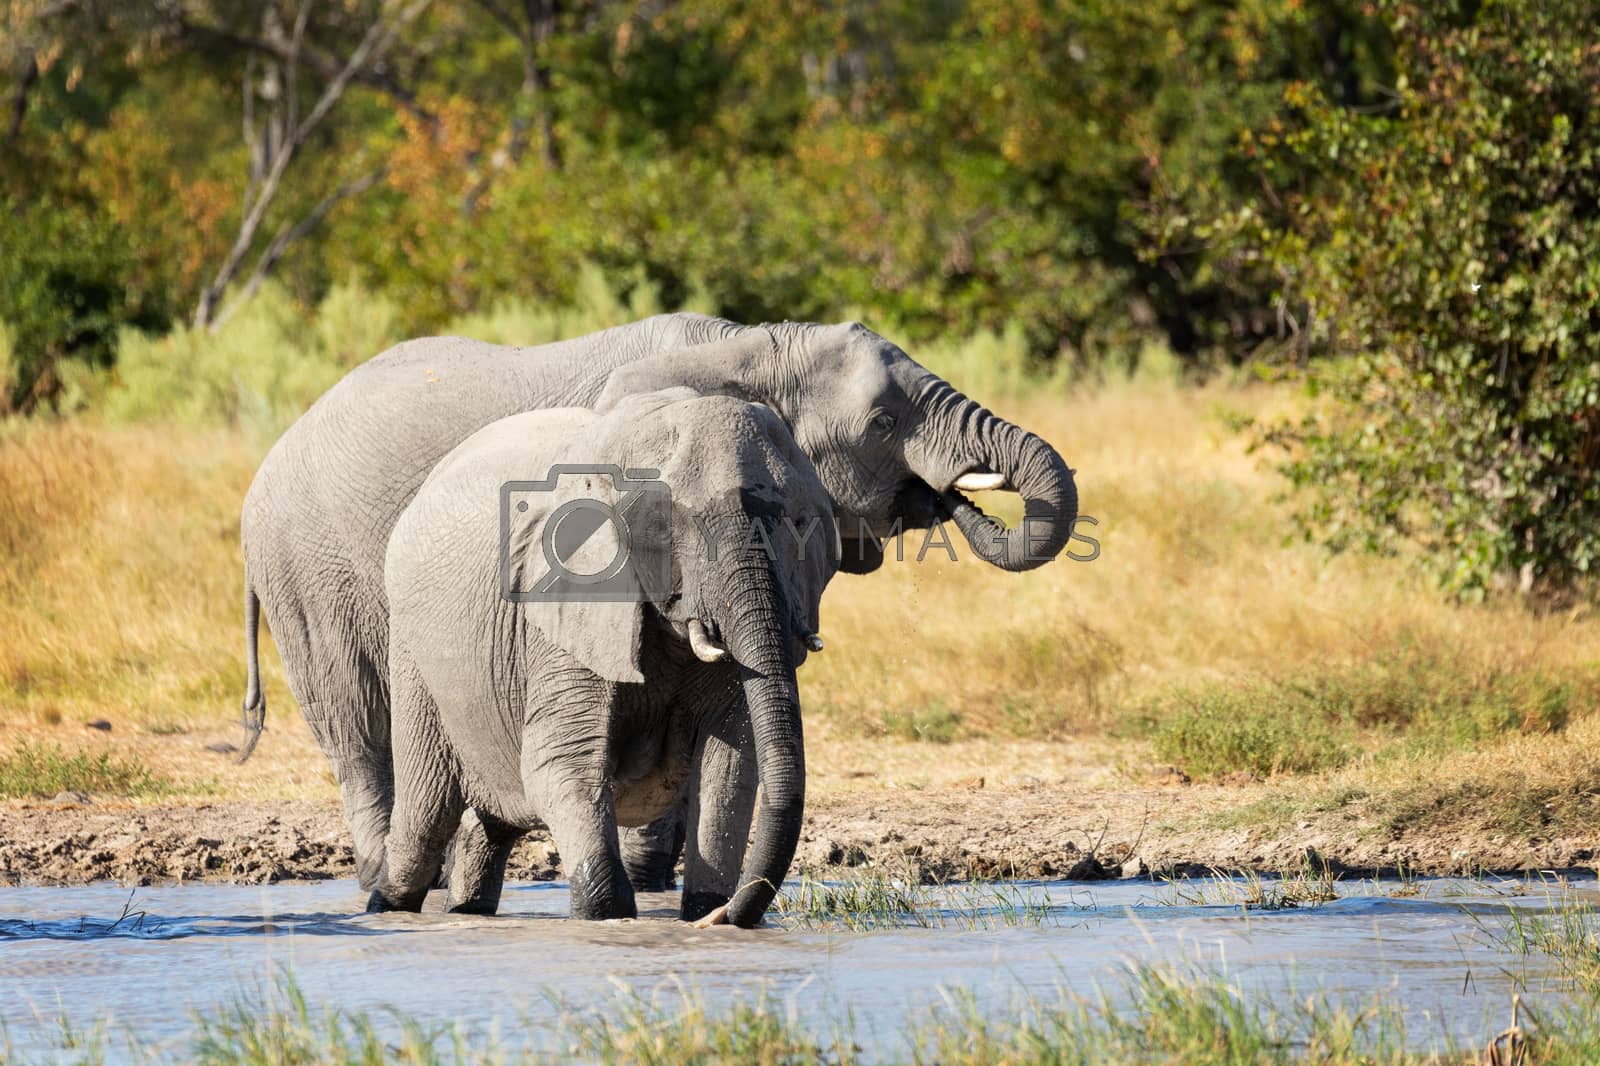 Royalty free image of African Elephant on waterhole, Africa safari wildlife by artush